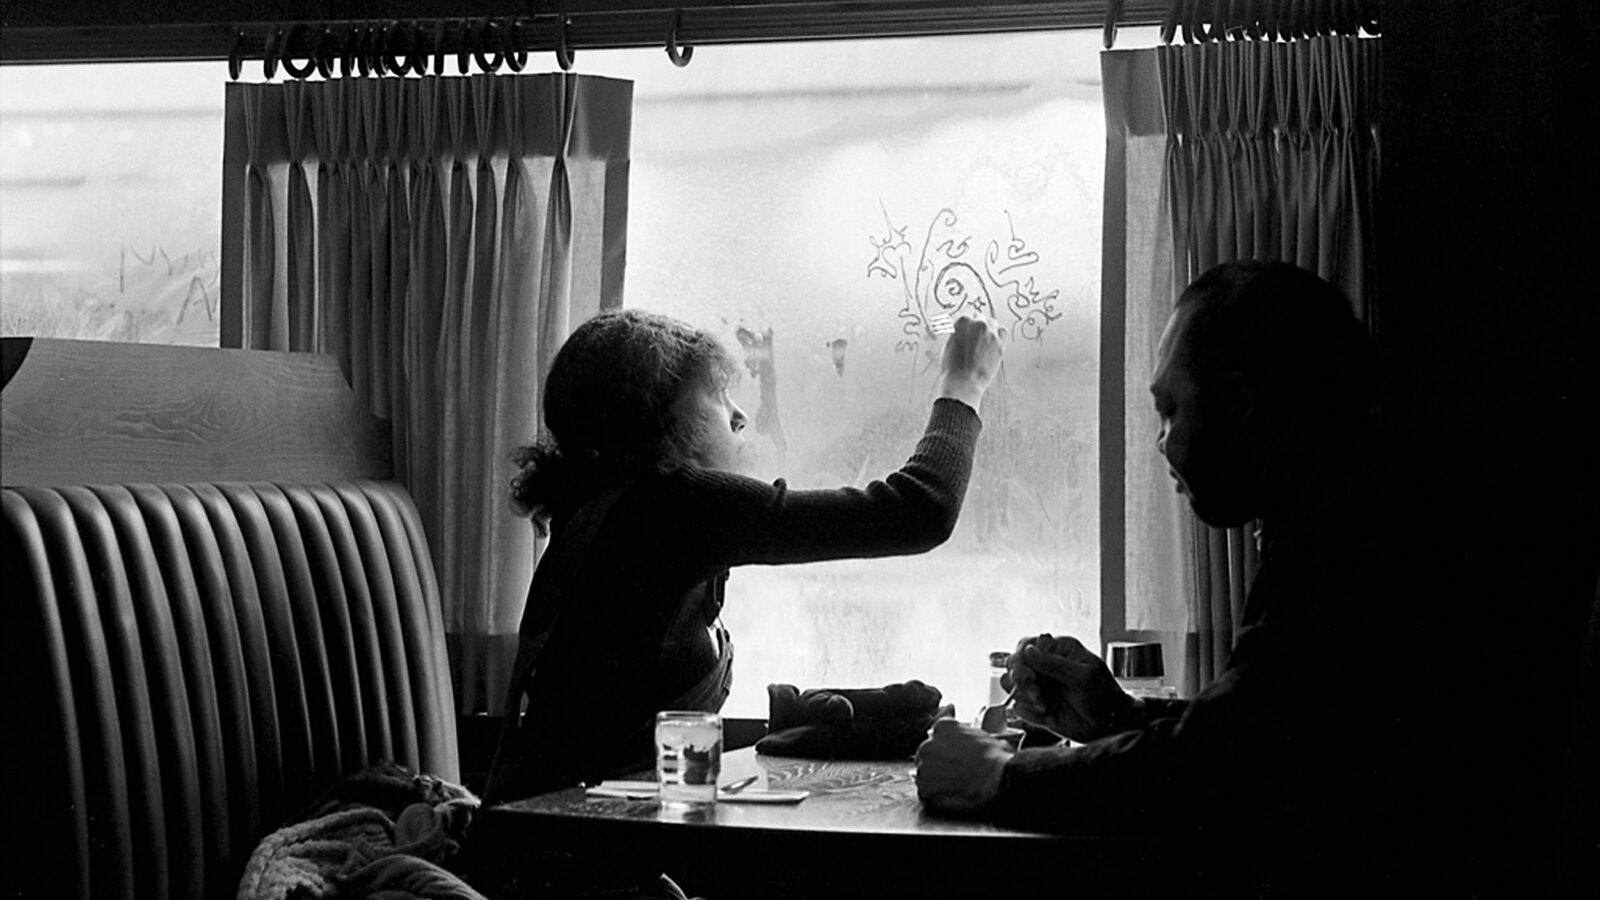 Woman in restaurant booth doodles in window fog, 1969.